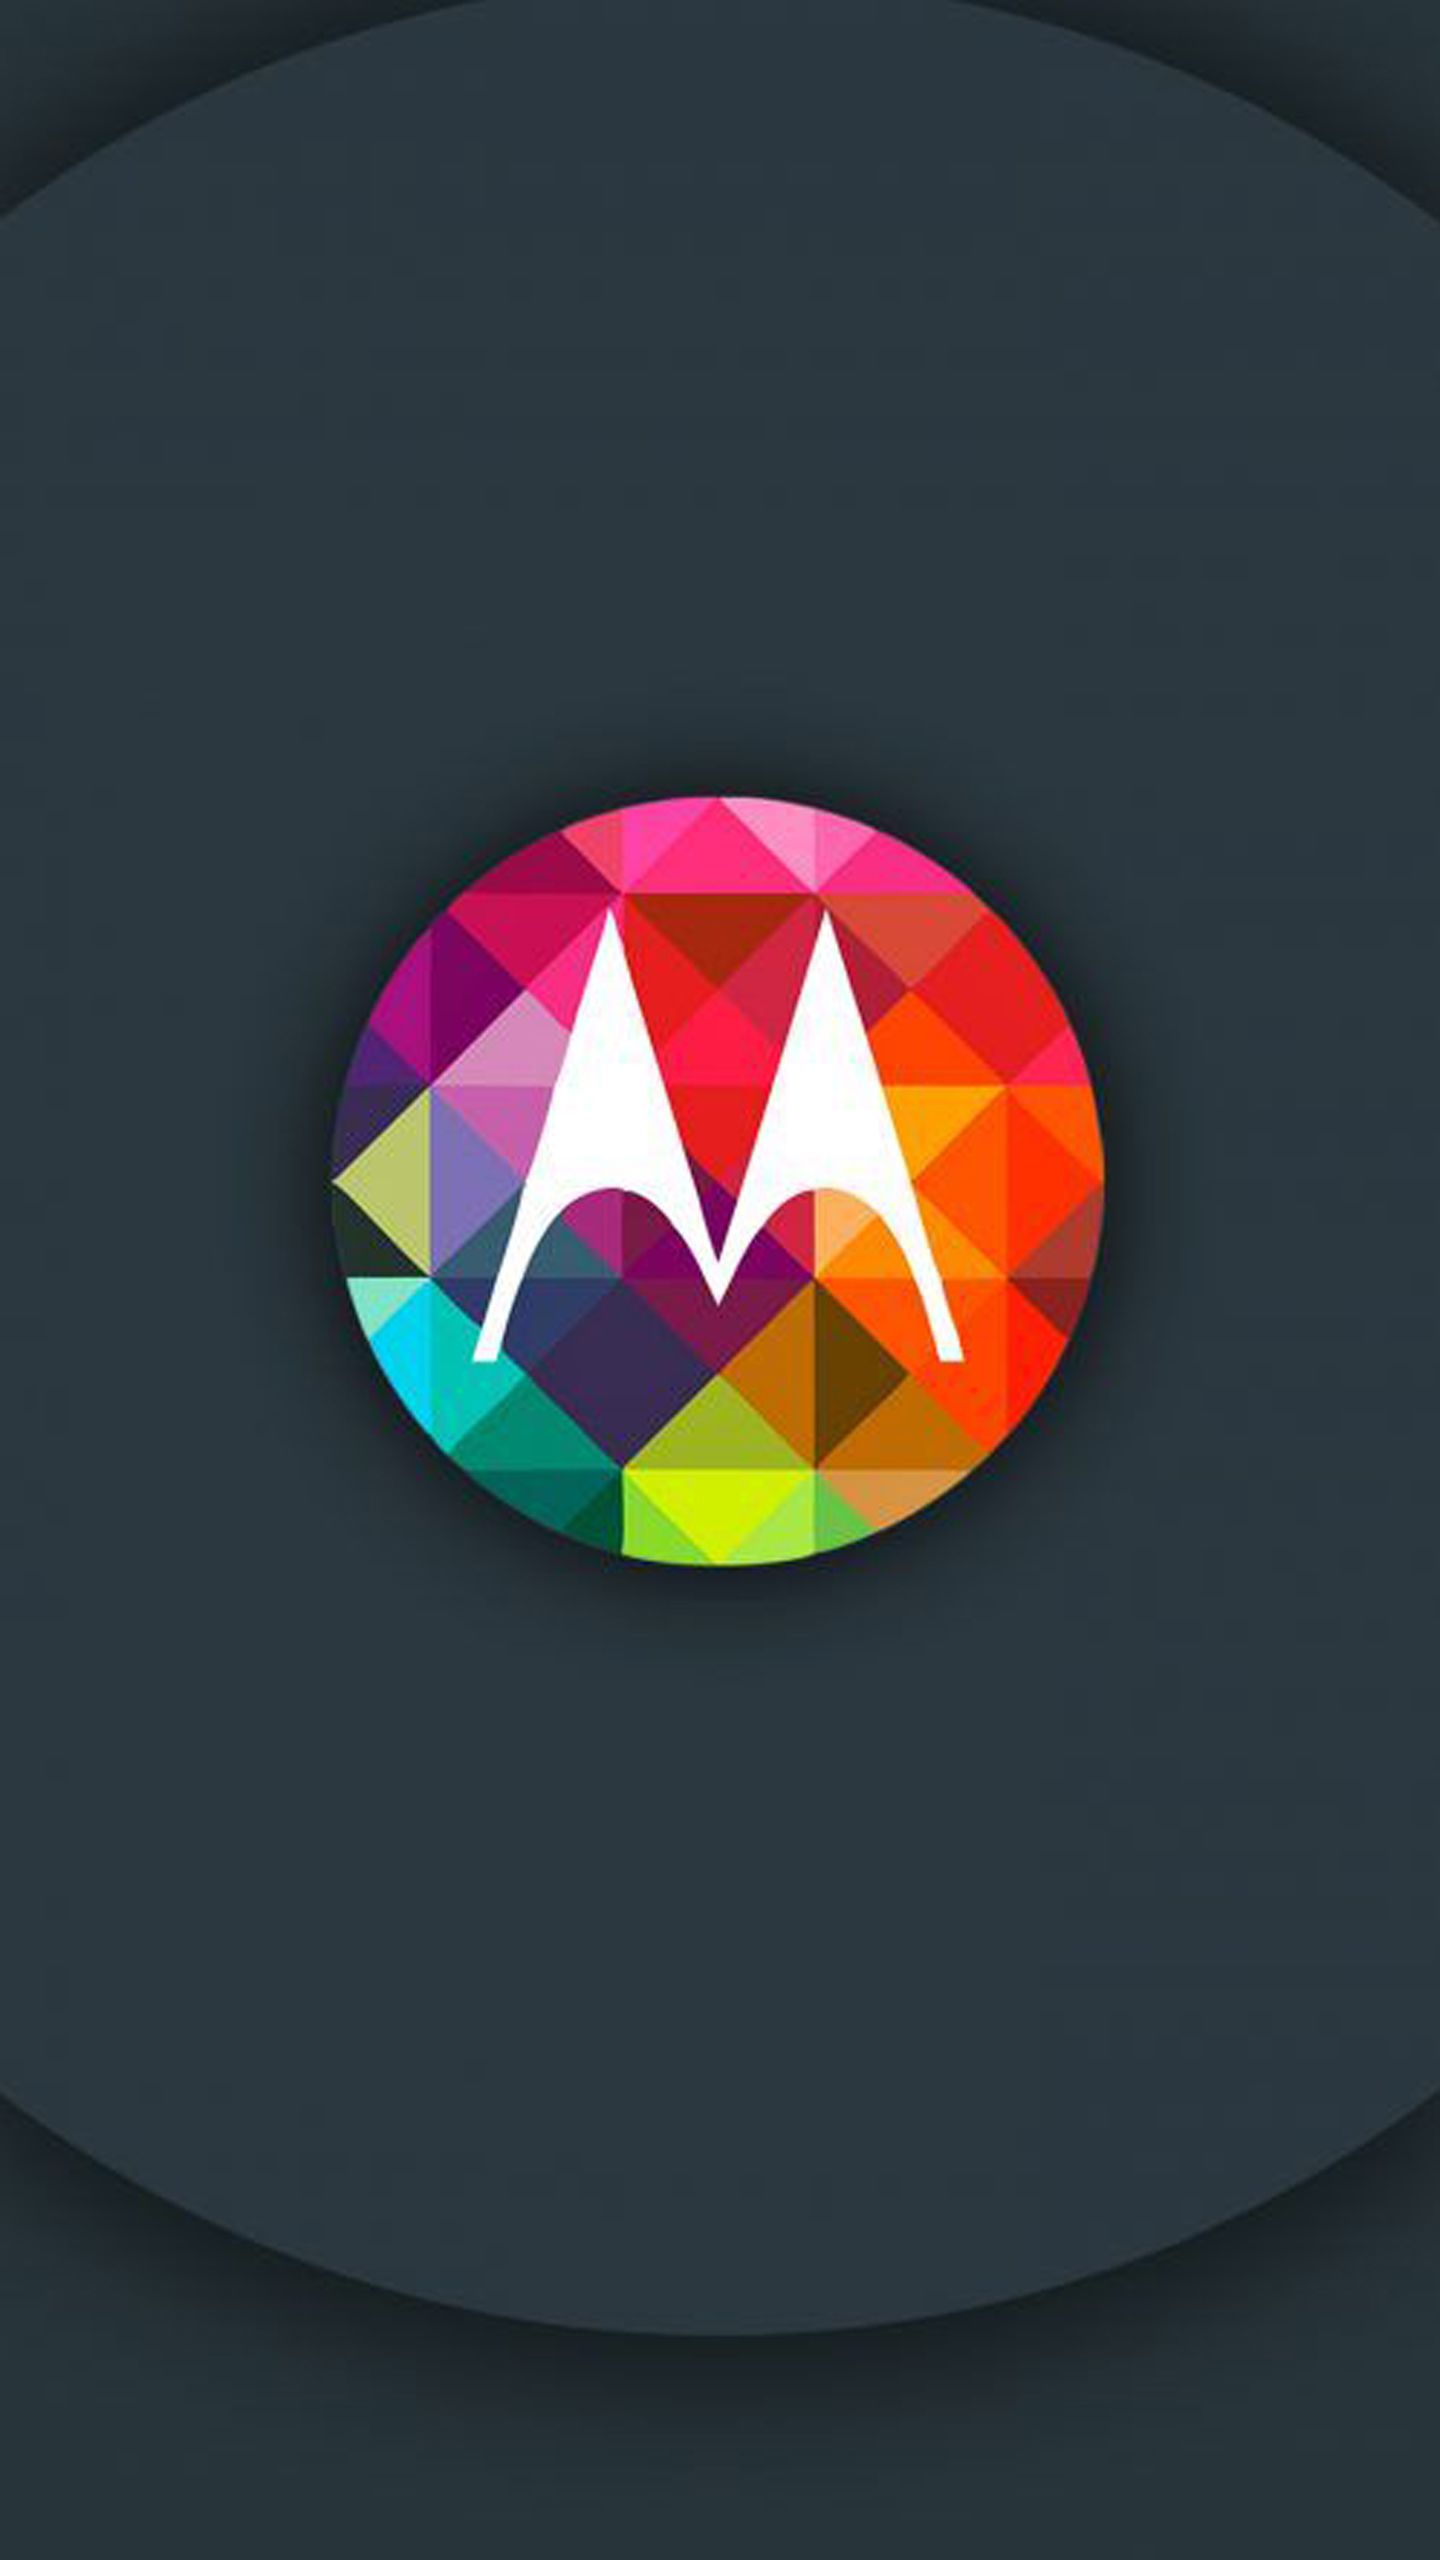 Motorola Moto Z Wallpaper with Logo Wallpaper. Wallpaper Download. High Resolution Wallpaper